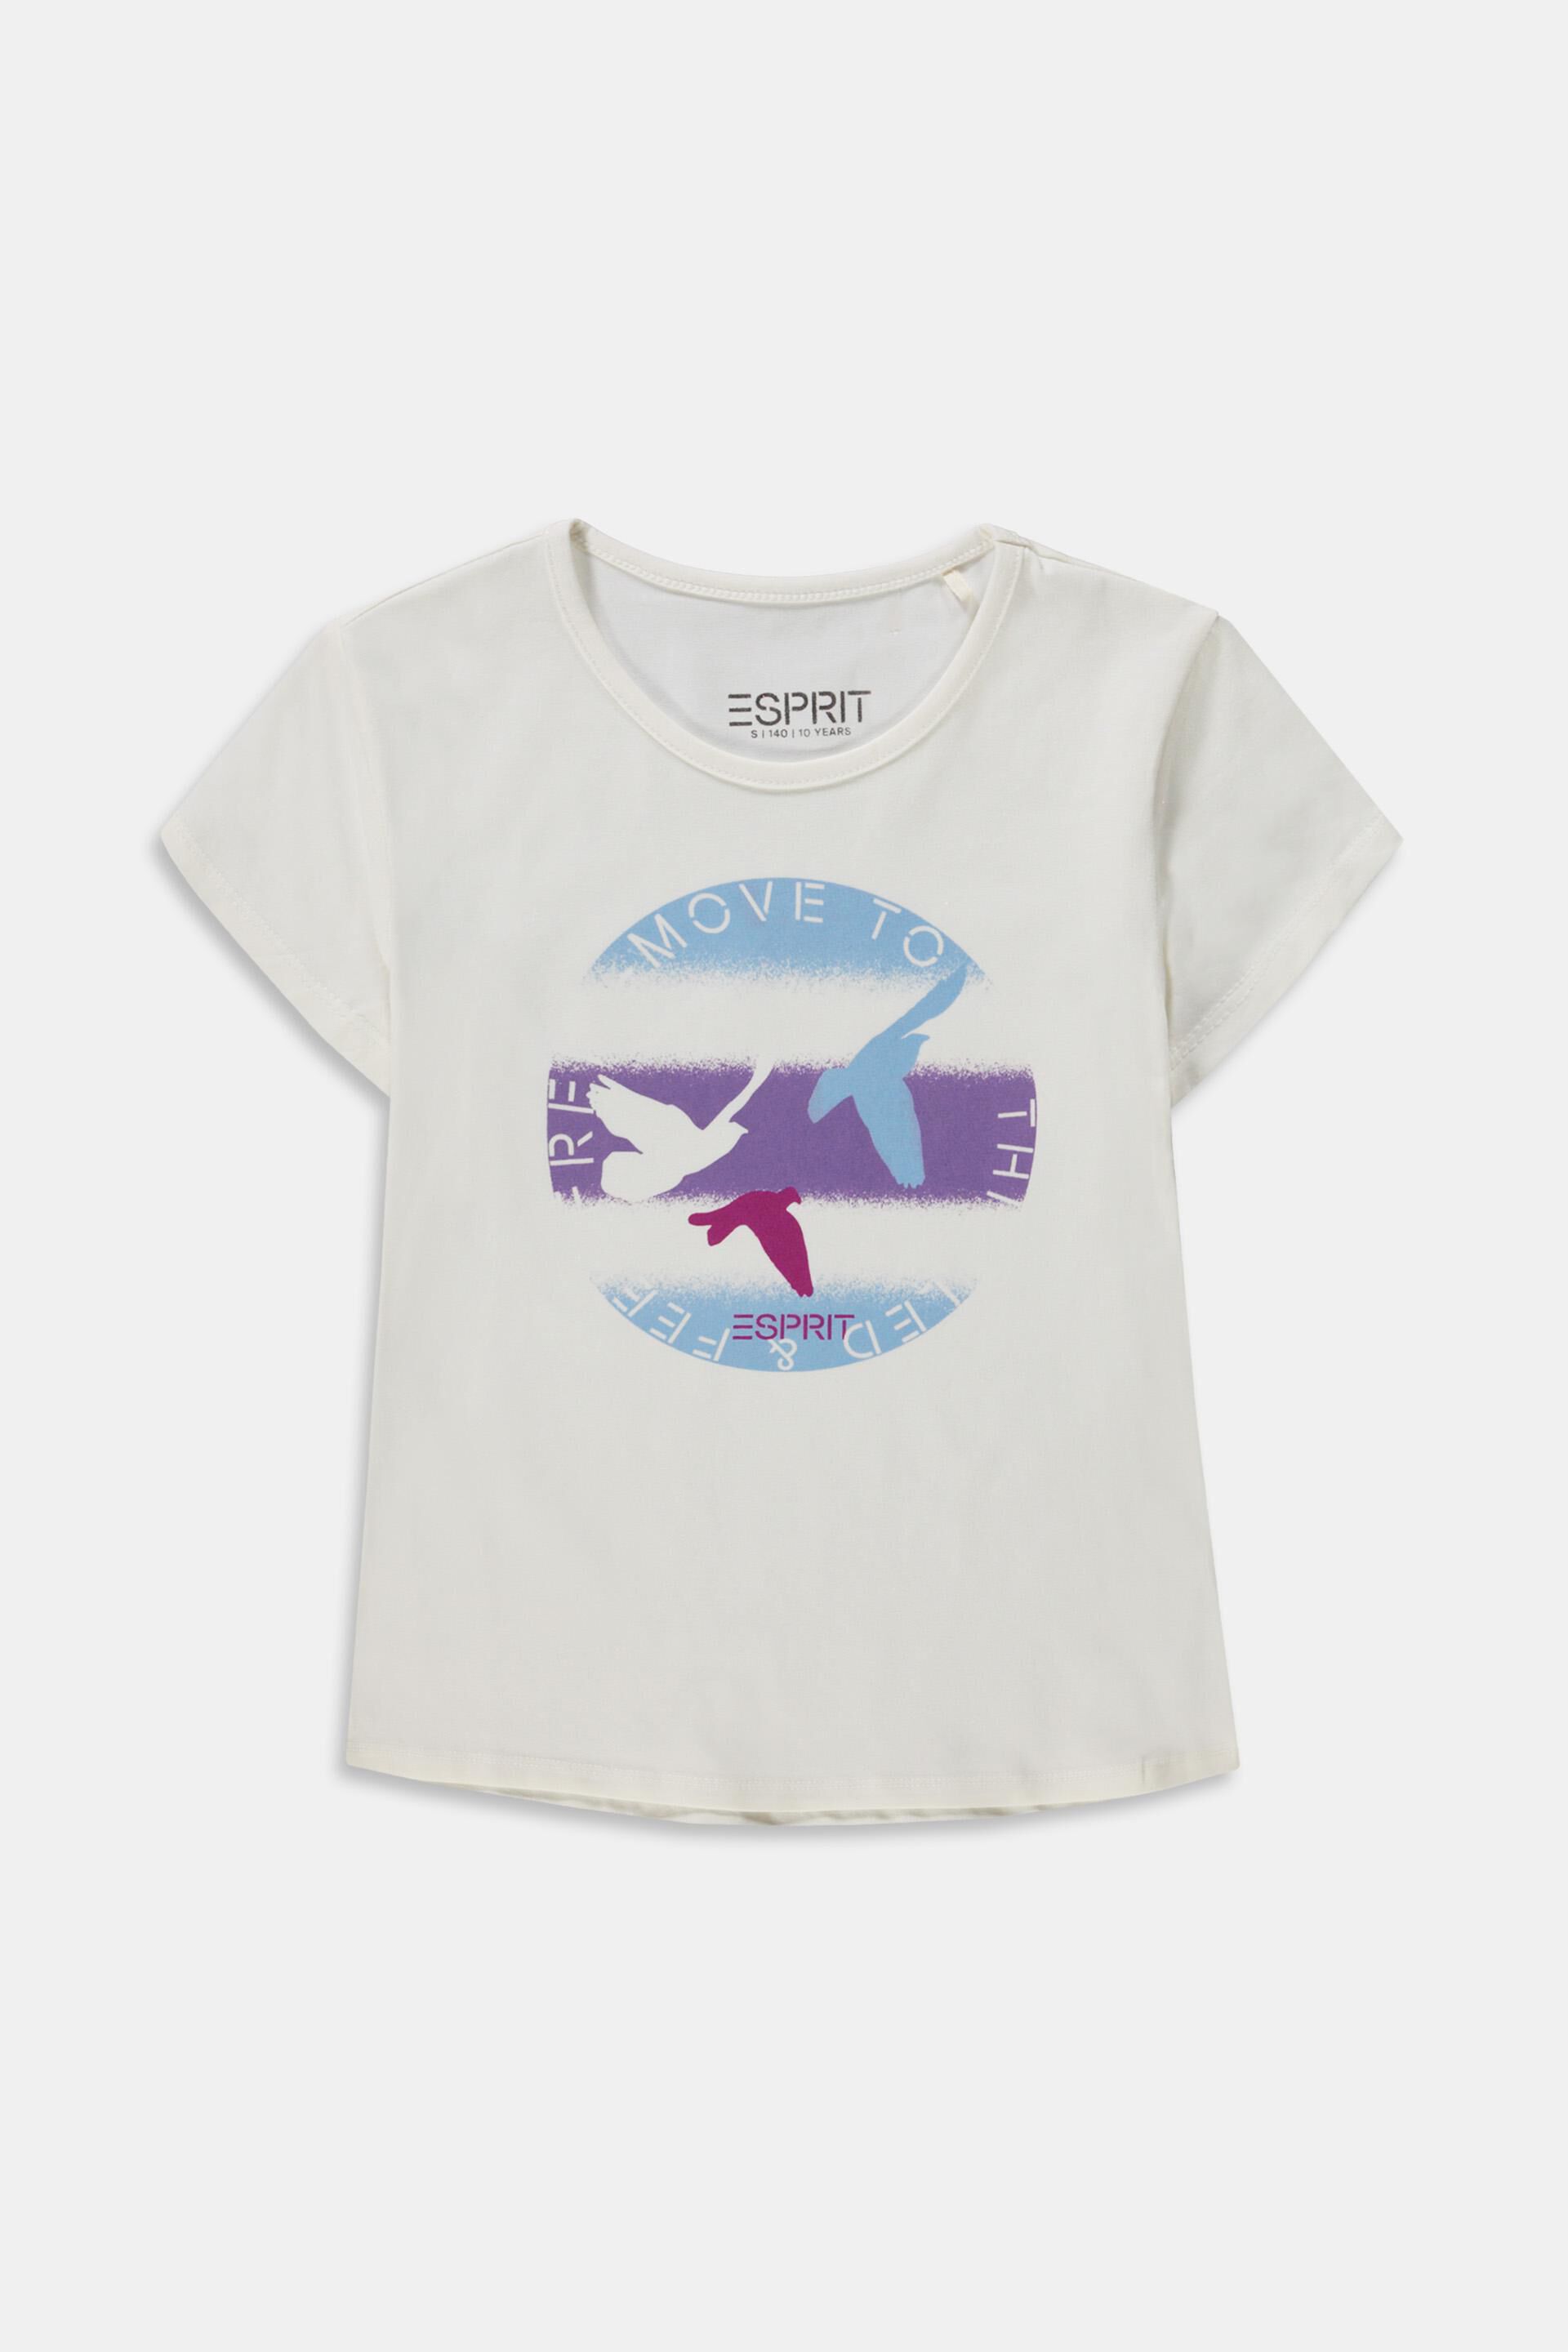 ESPRITESPRIT T-Shirt Bambine e Ragazze Marca 